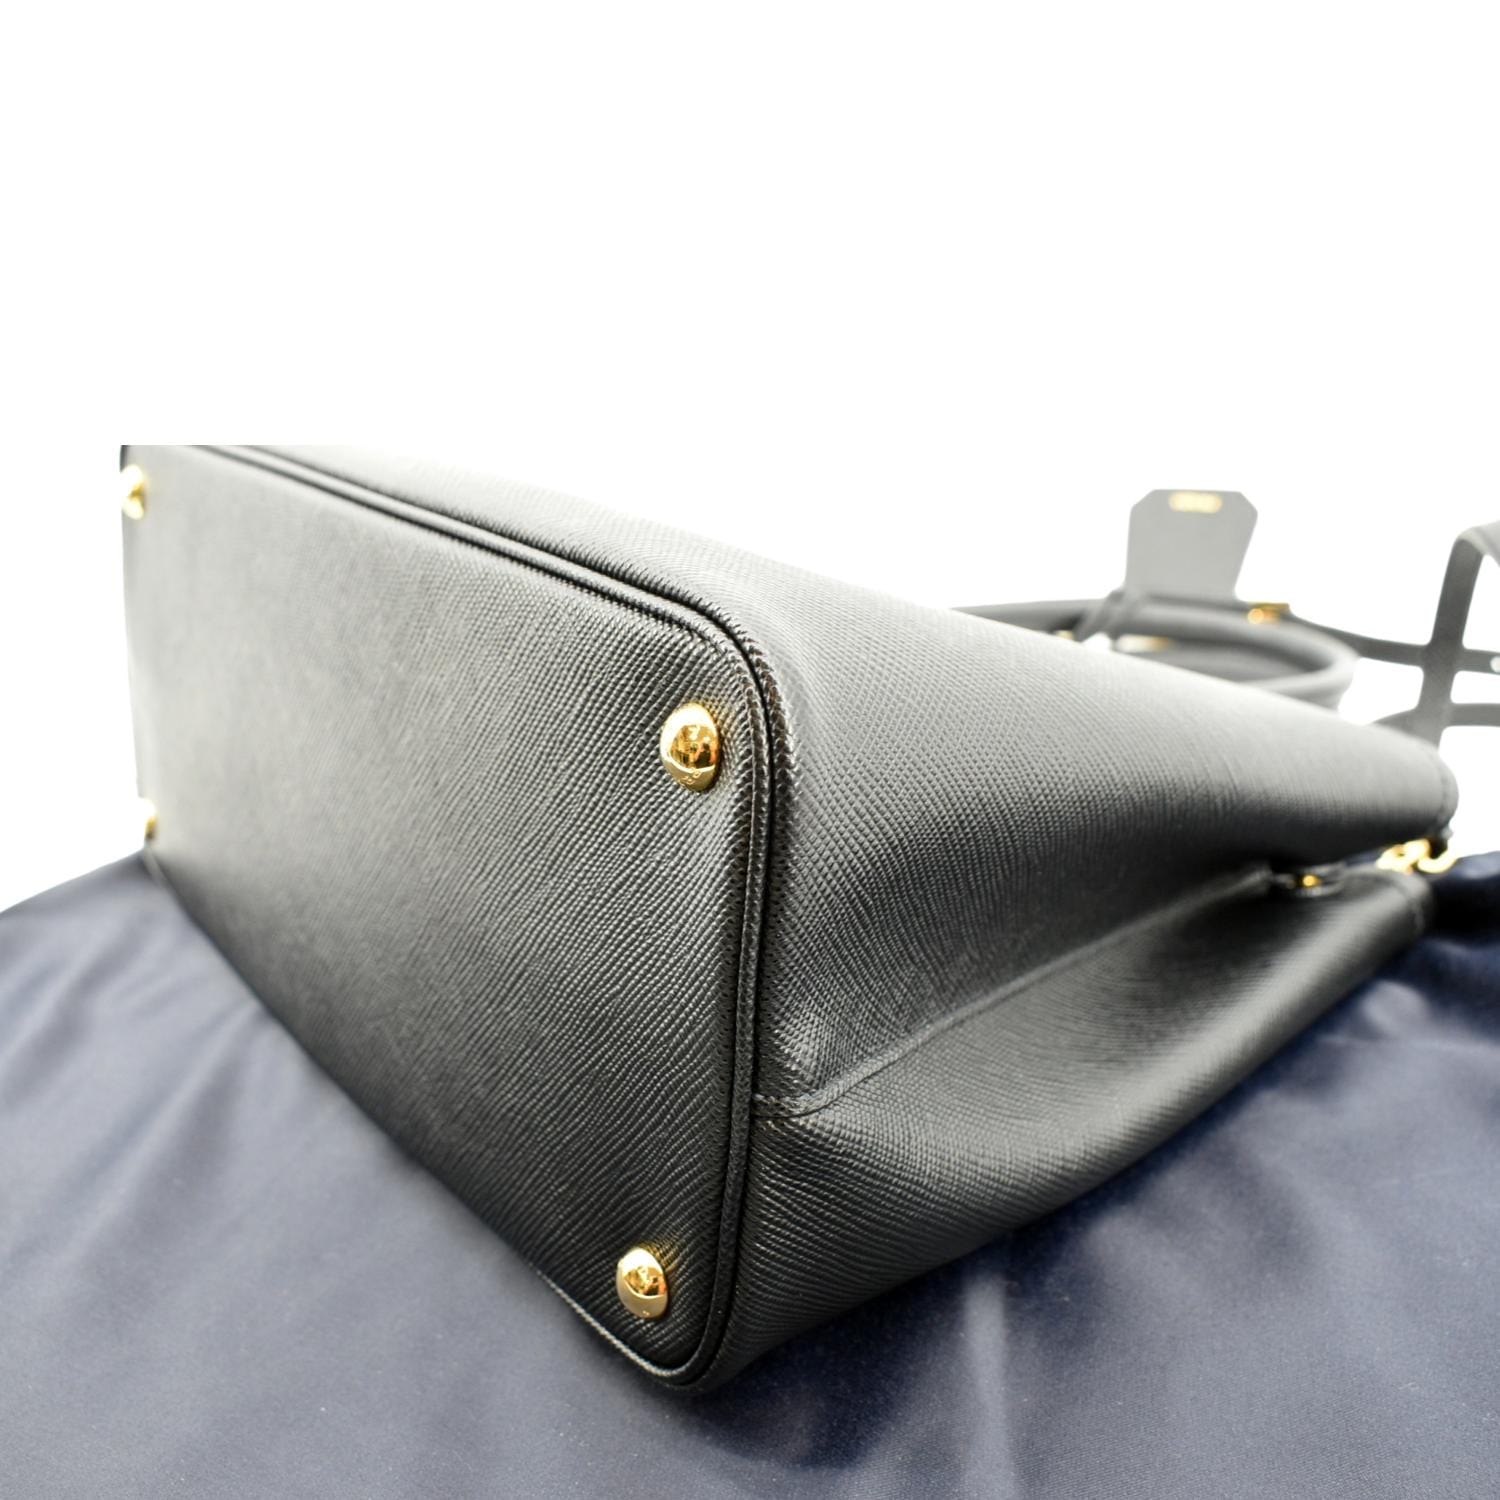 Prada Double Saffiano Leather Tote Bag - Black